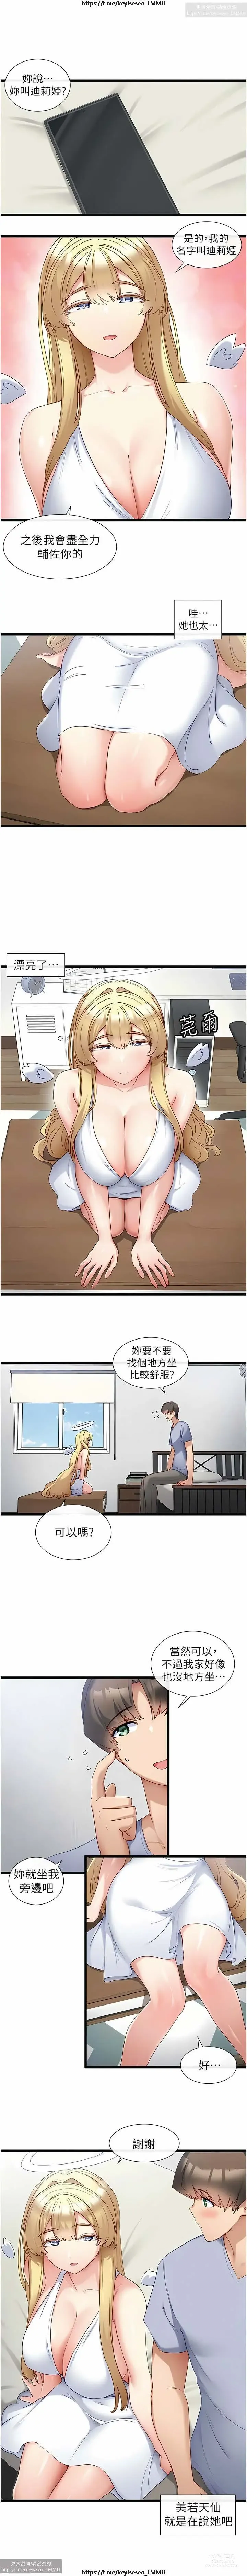 Page 24 of manga 脱单神器 28-55 完结